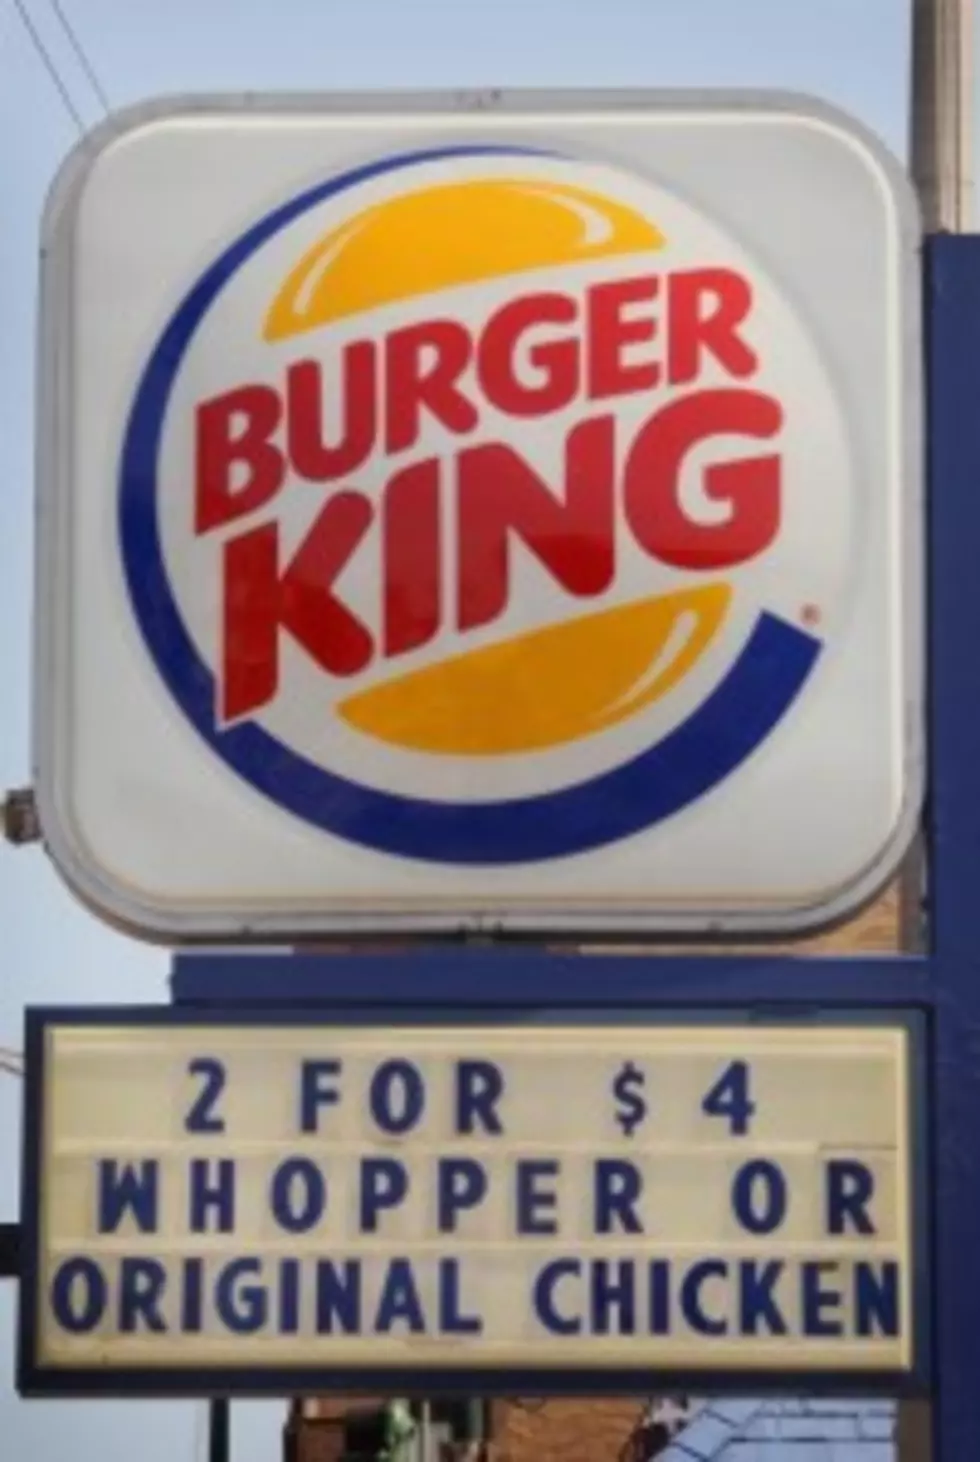 Burger King Testing Delivery Service